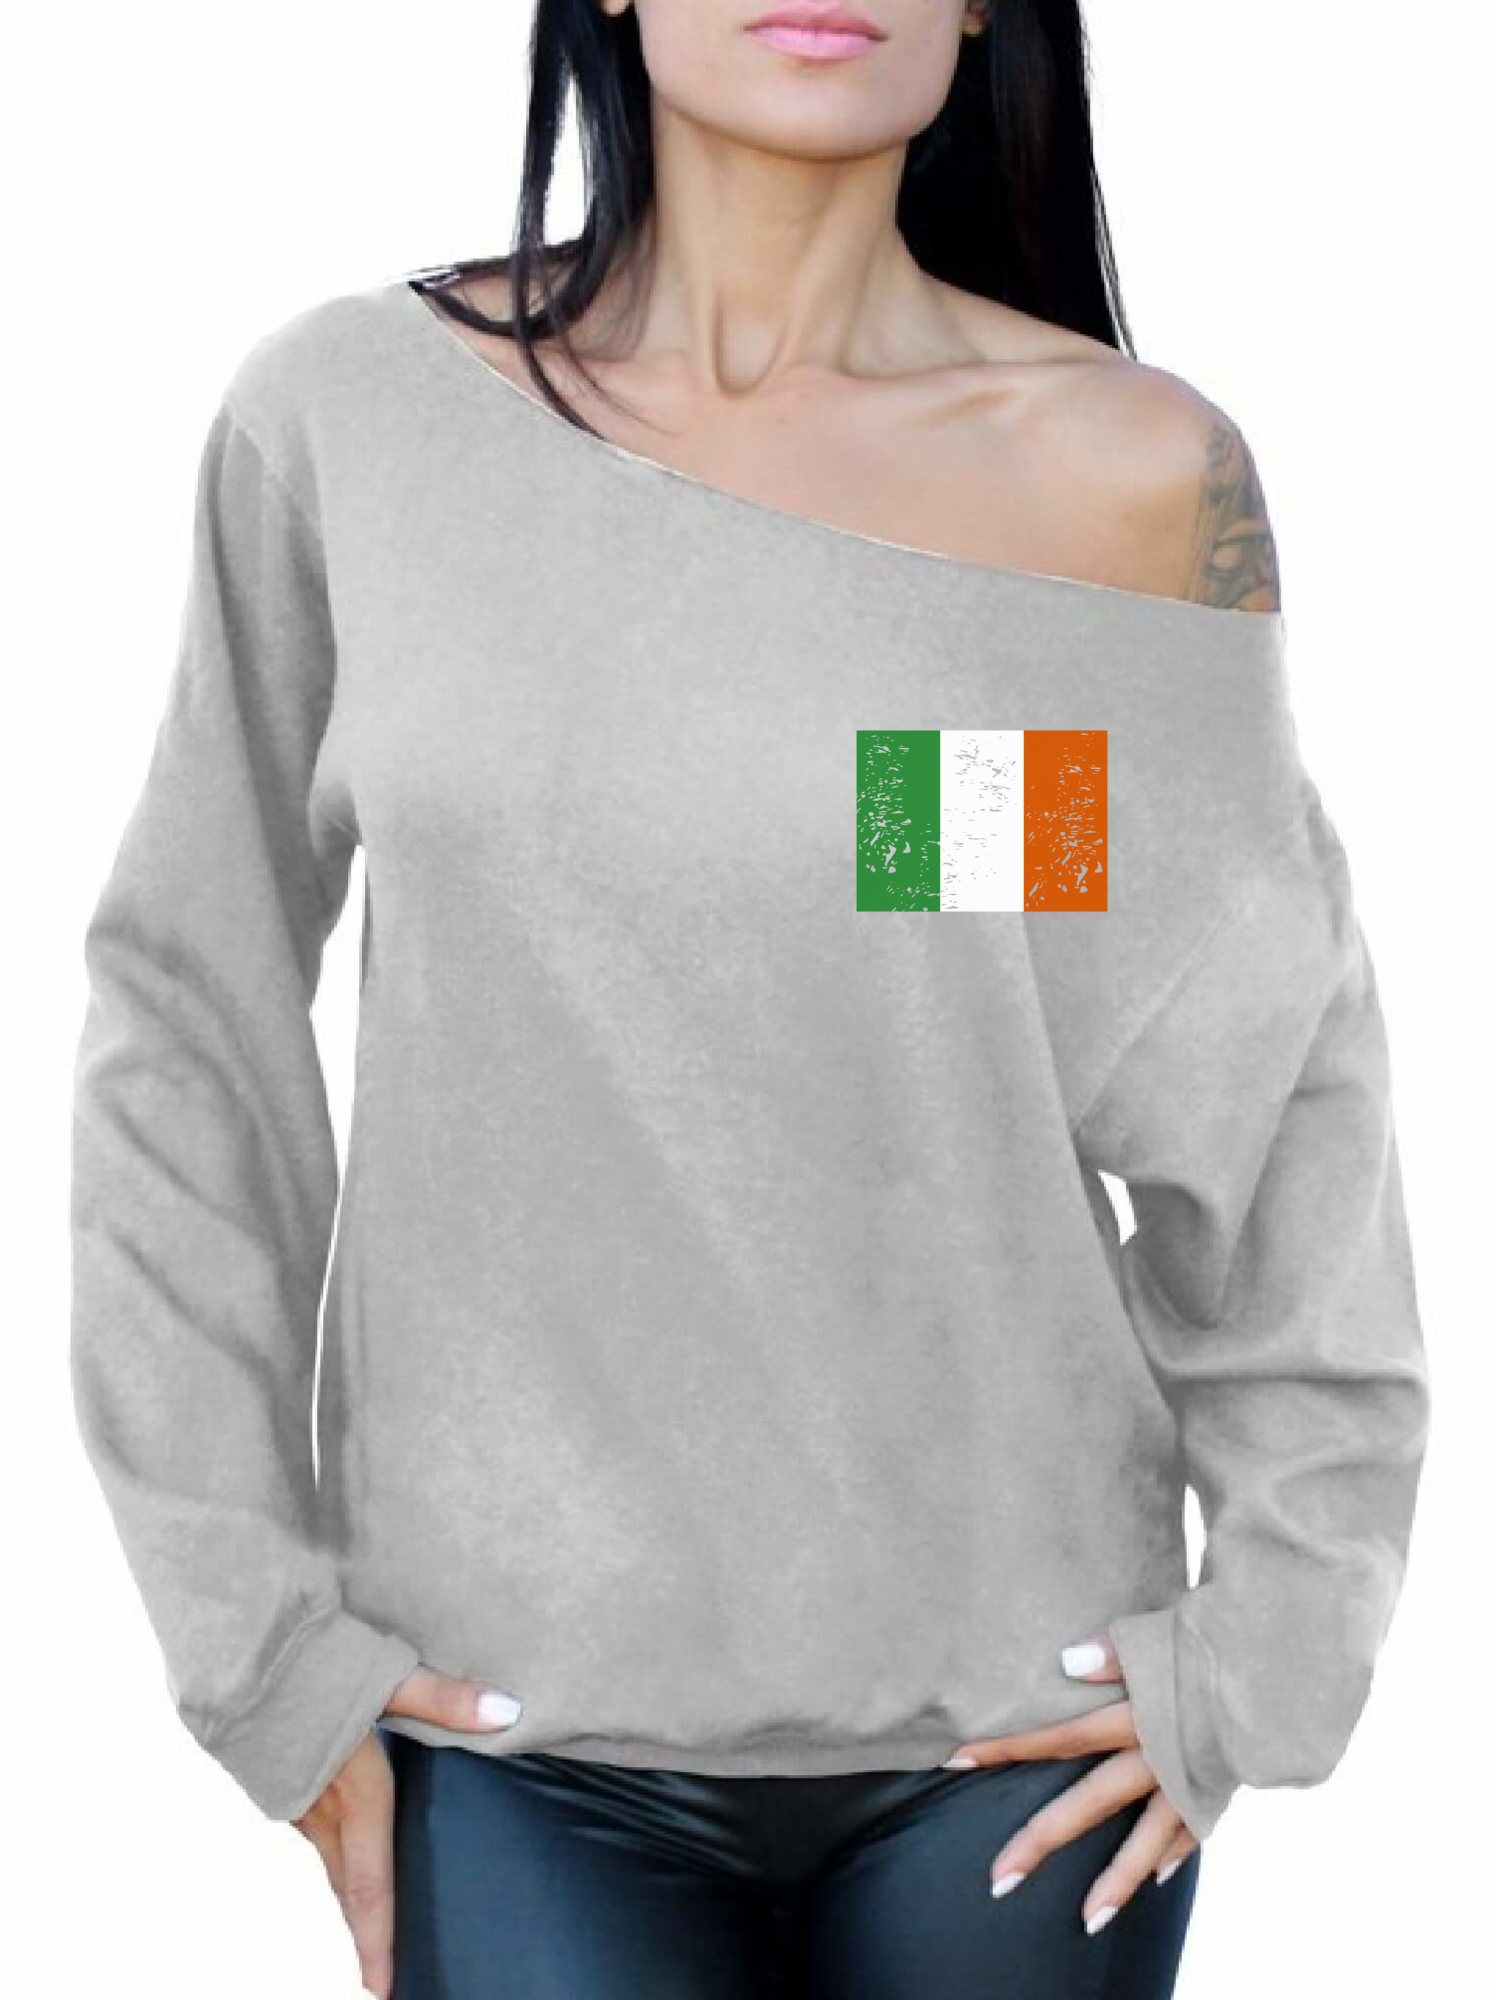 Awkward Styles Irish Flag Pocket Sweatshirt St. Patricks Day Off Shoulder Top for Women Proud Irish Sweatshirt Irish Gifts Flag of Ireland Distressed Irish Tricolor Sweatshirt St Paddy's Day Sweater - image 1 of 6